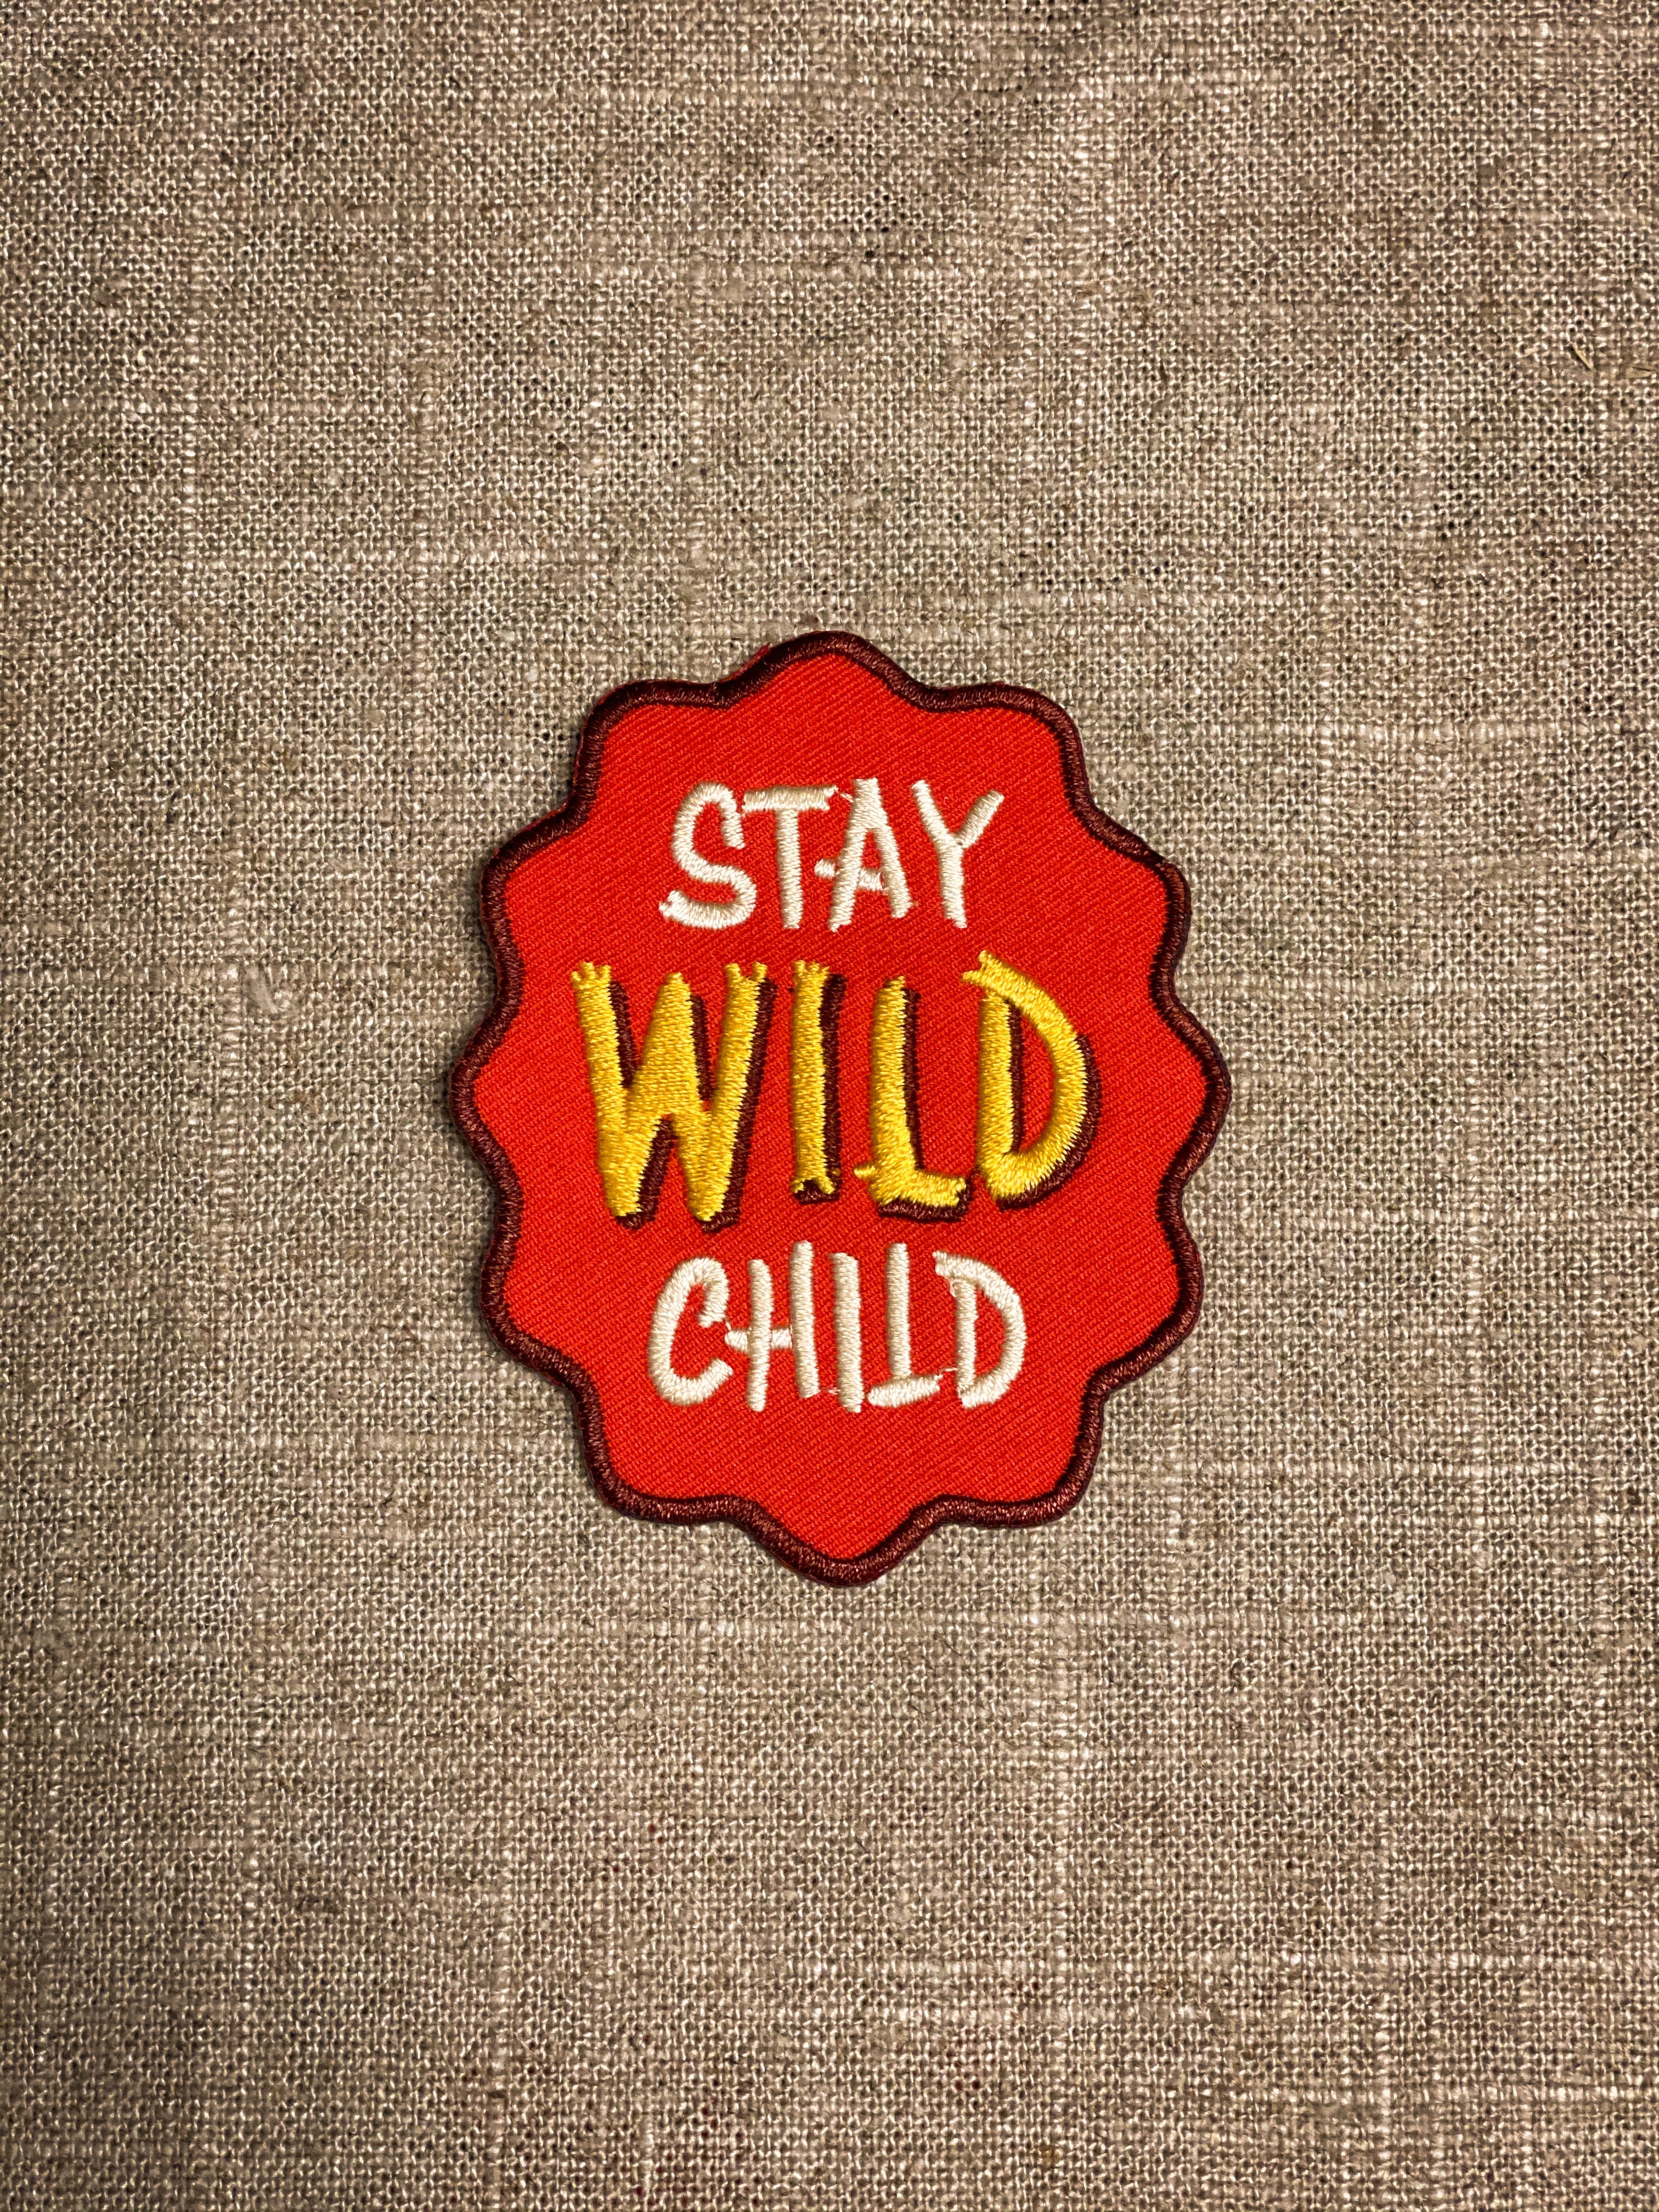 Stay Wild Child Patch